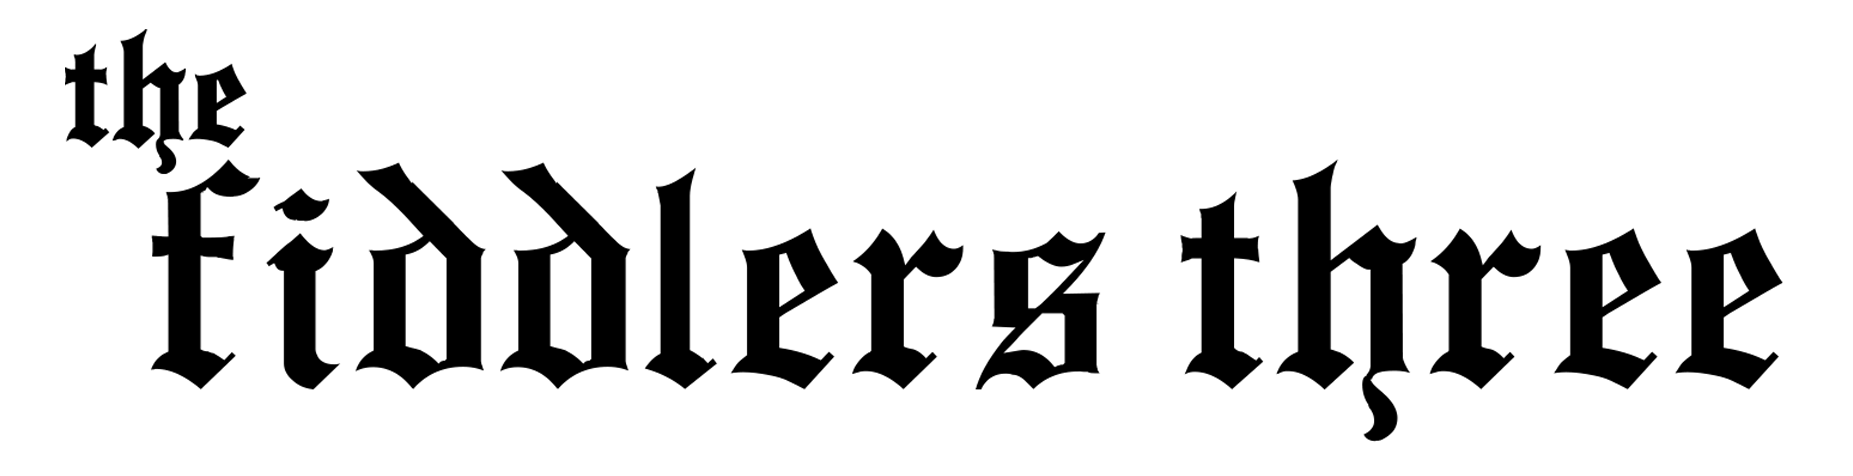 The Fiddler's Three logo scroll